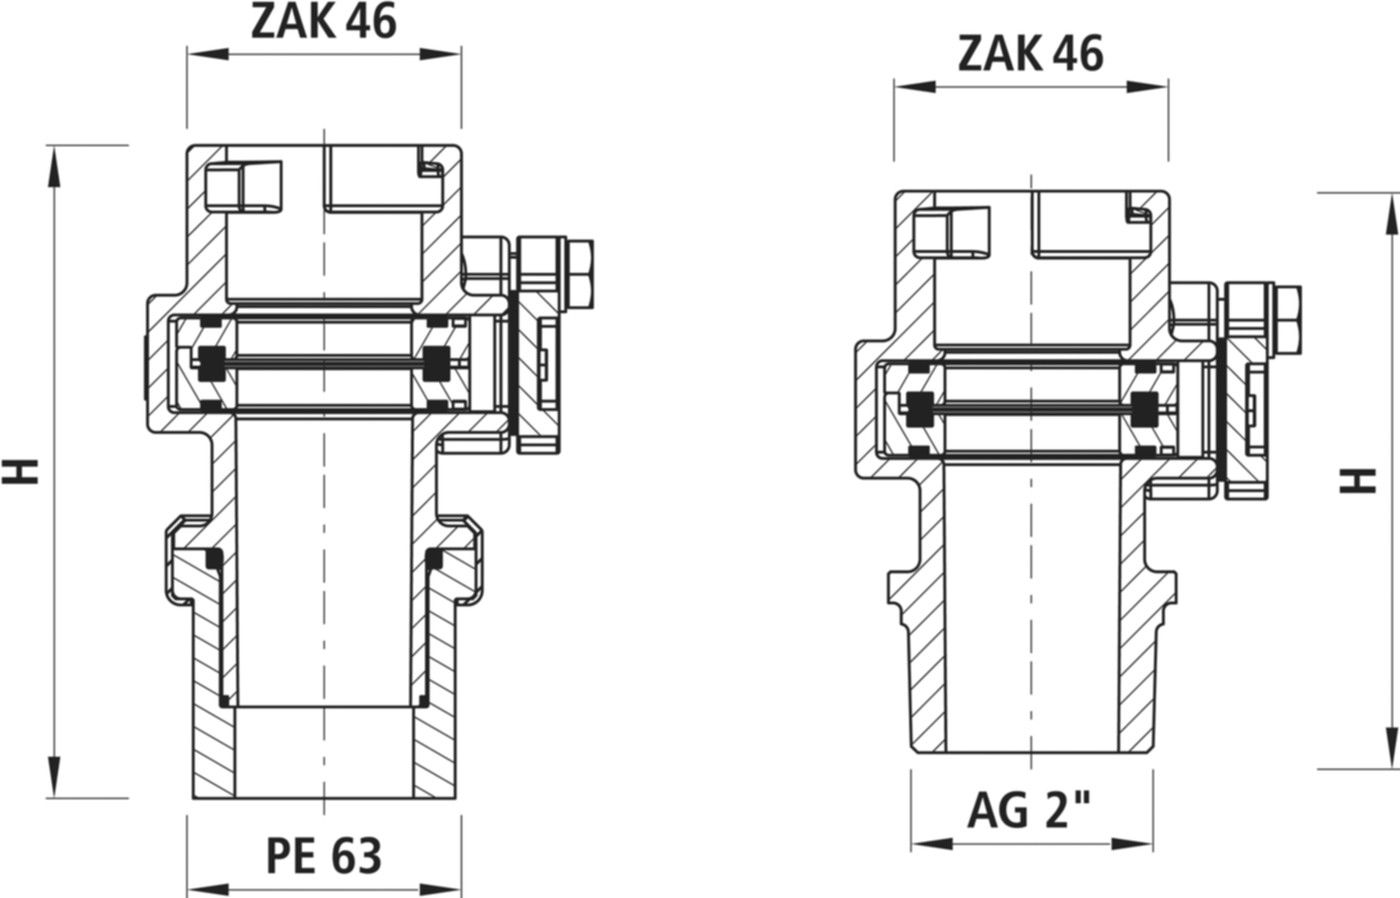 Anbohrsperre Typ 1 PE/ZAK 3721 d 63mm - ZAK - Hawle Hausanschluss- und Anbohrarmaturen